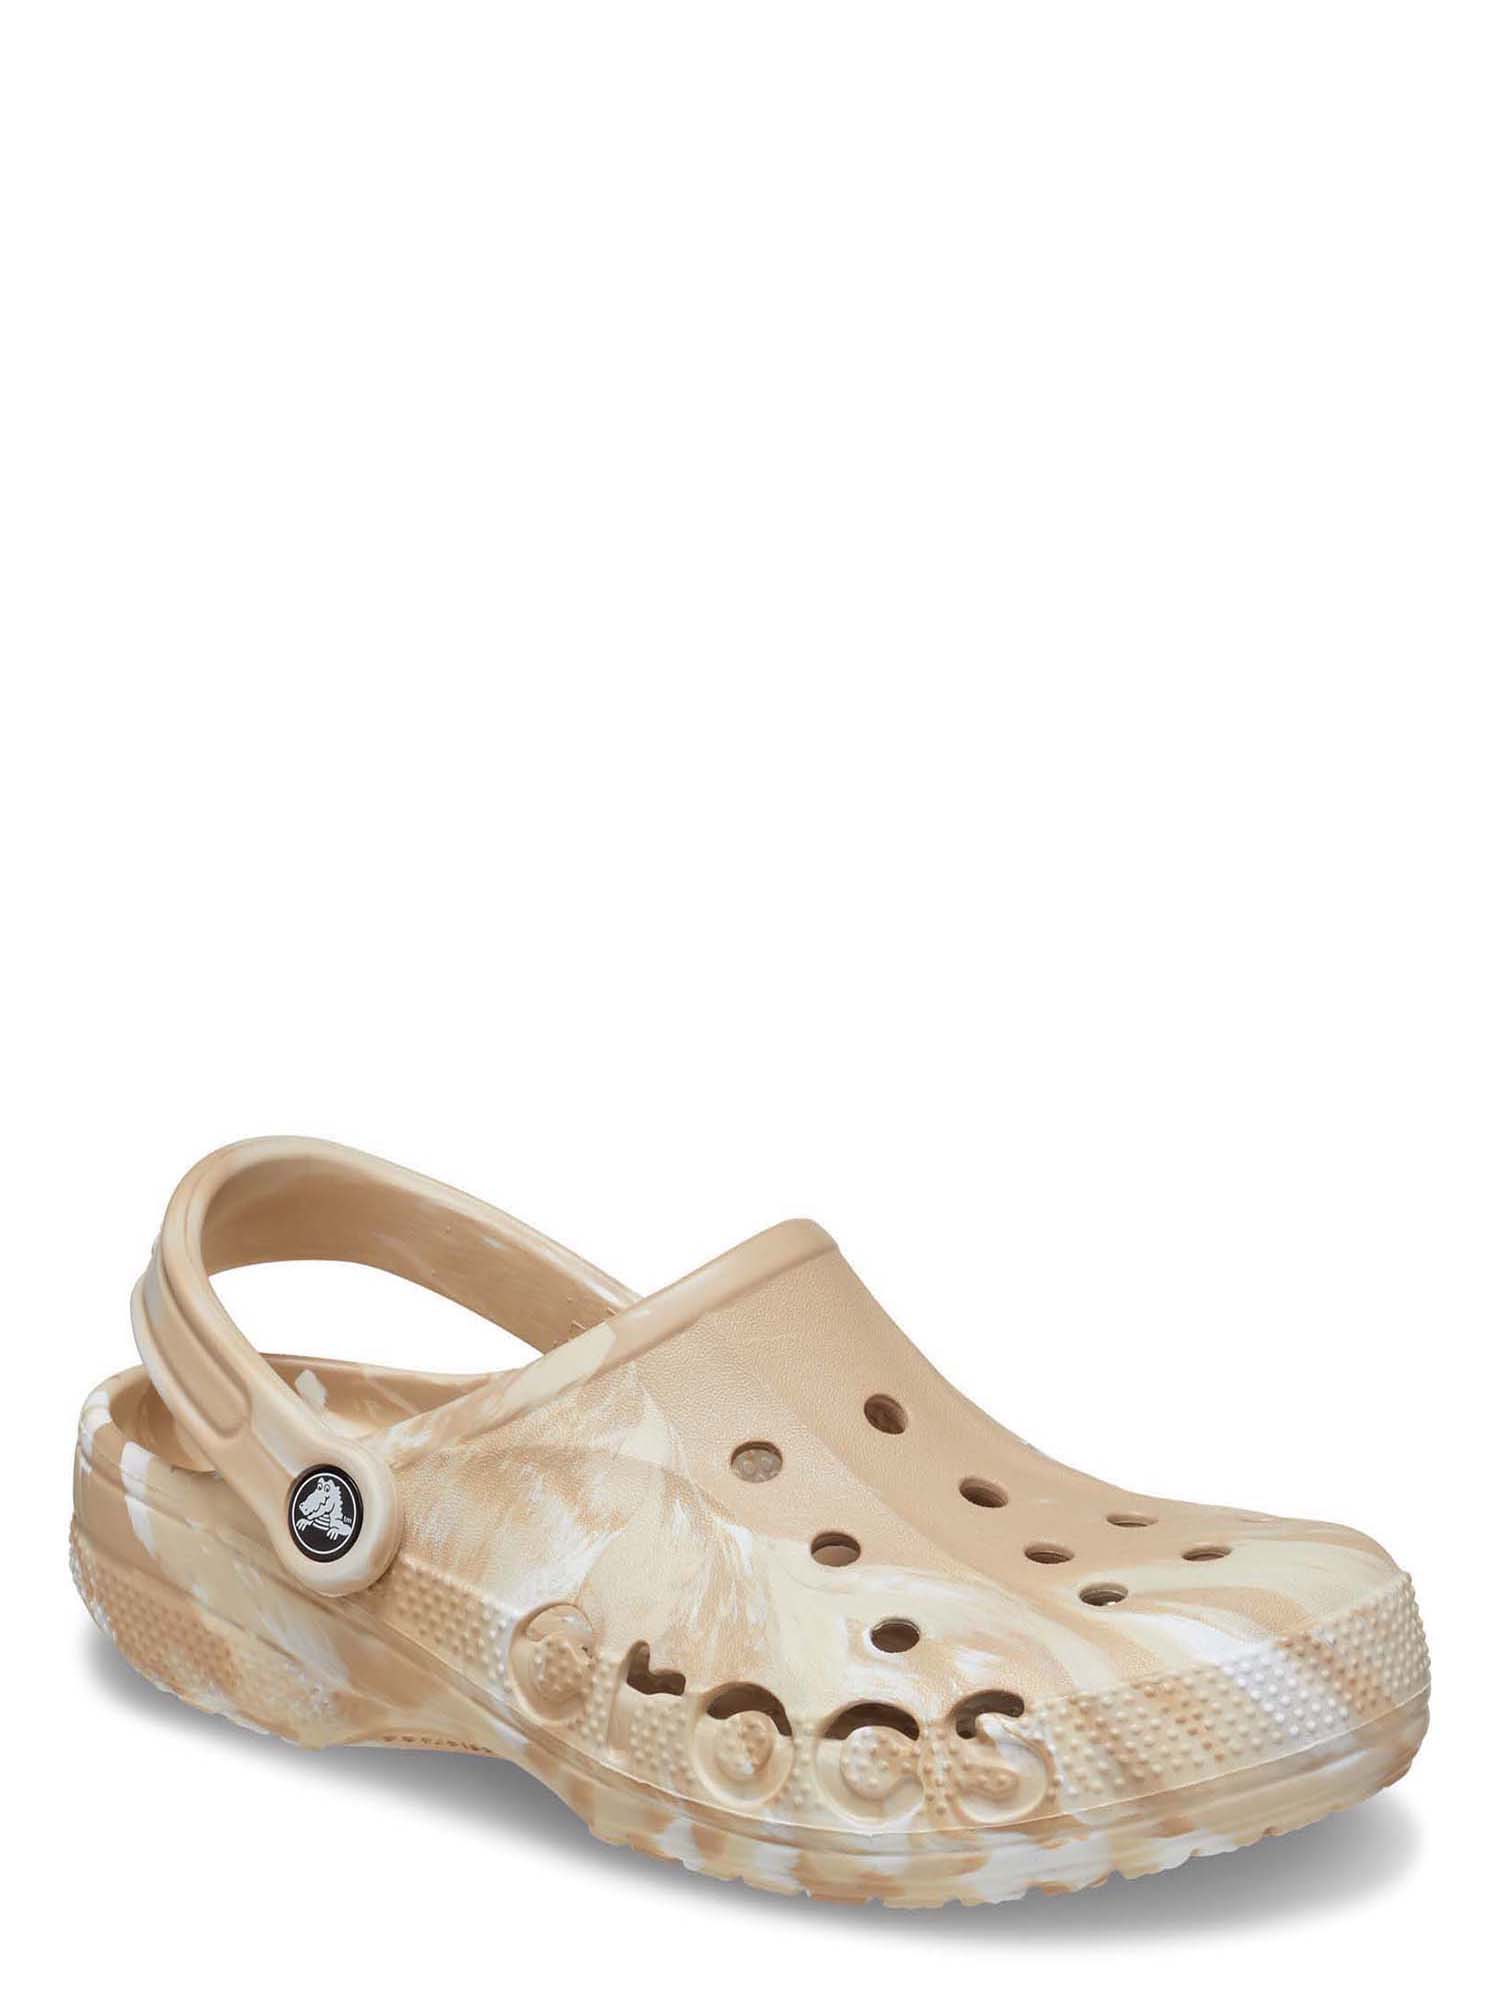 Crocs Unisex Baya Marbled Clog Sandal - image 1 of 7